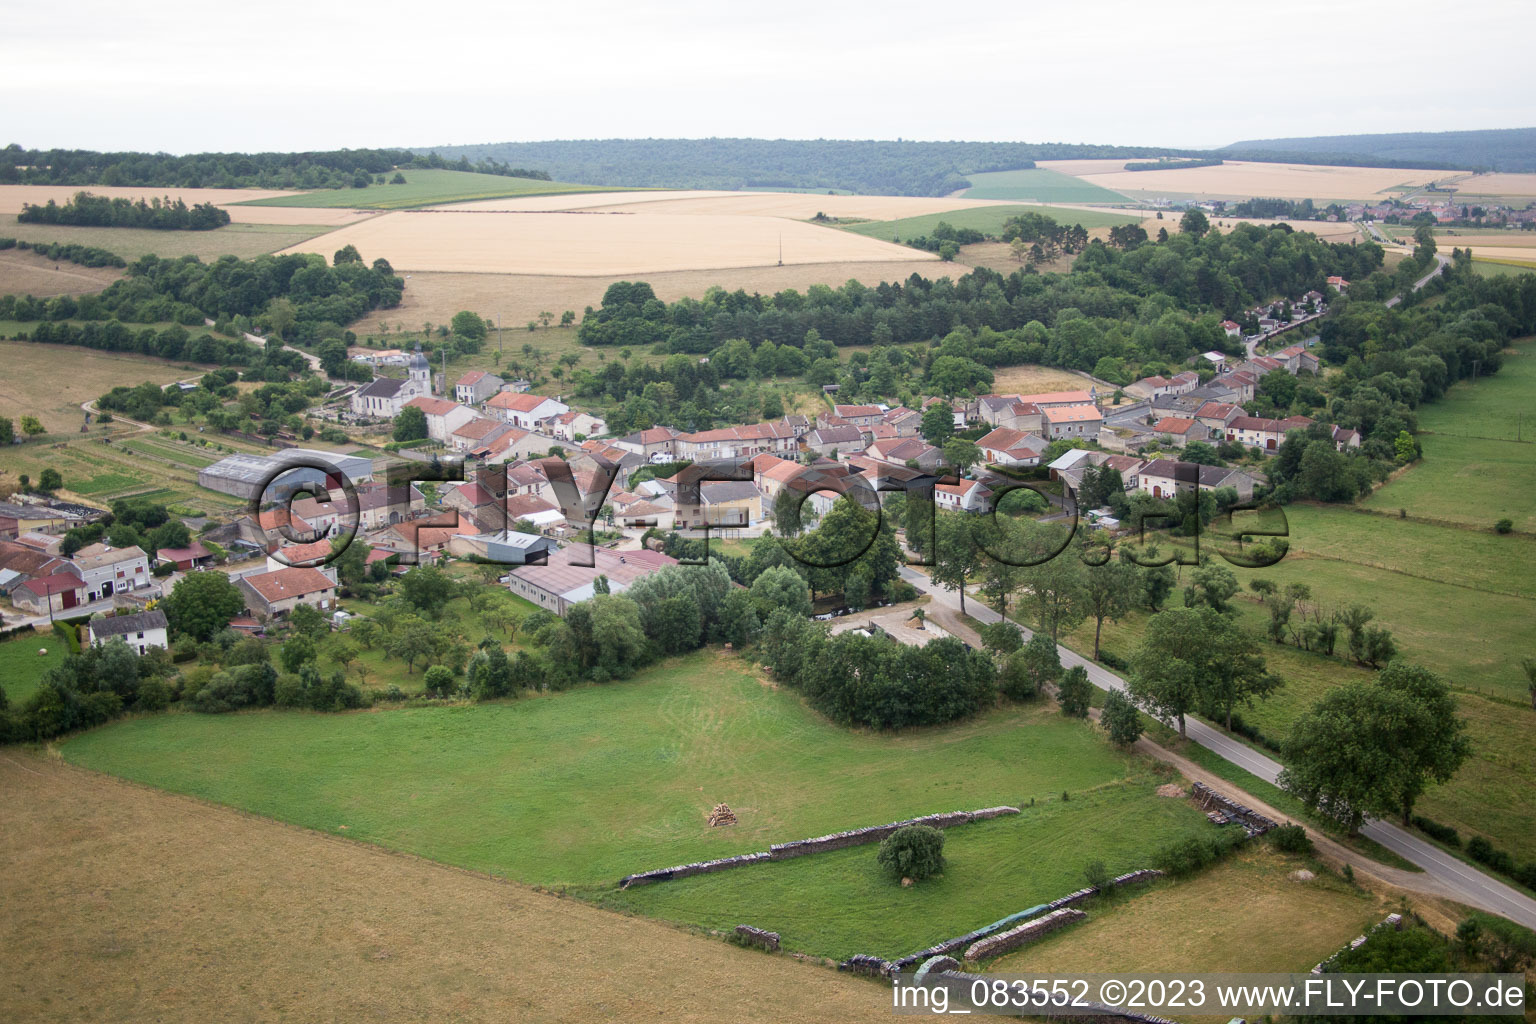 Gibeaumeix im Bundesland Meurthe-et-Moselle, Frankreich